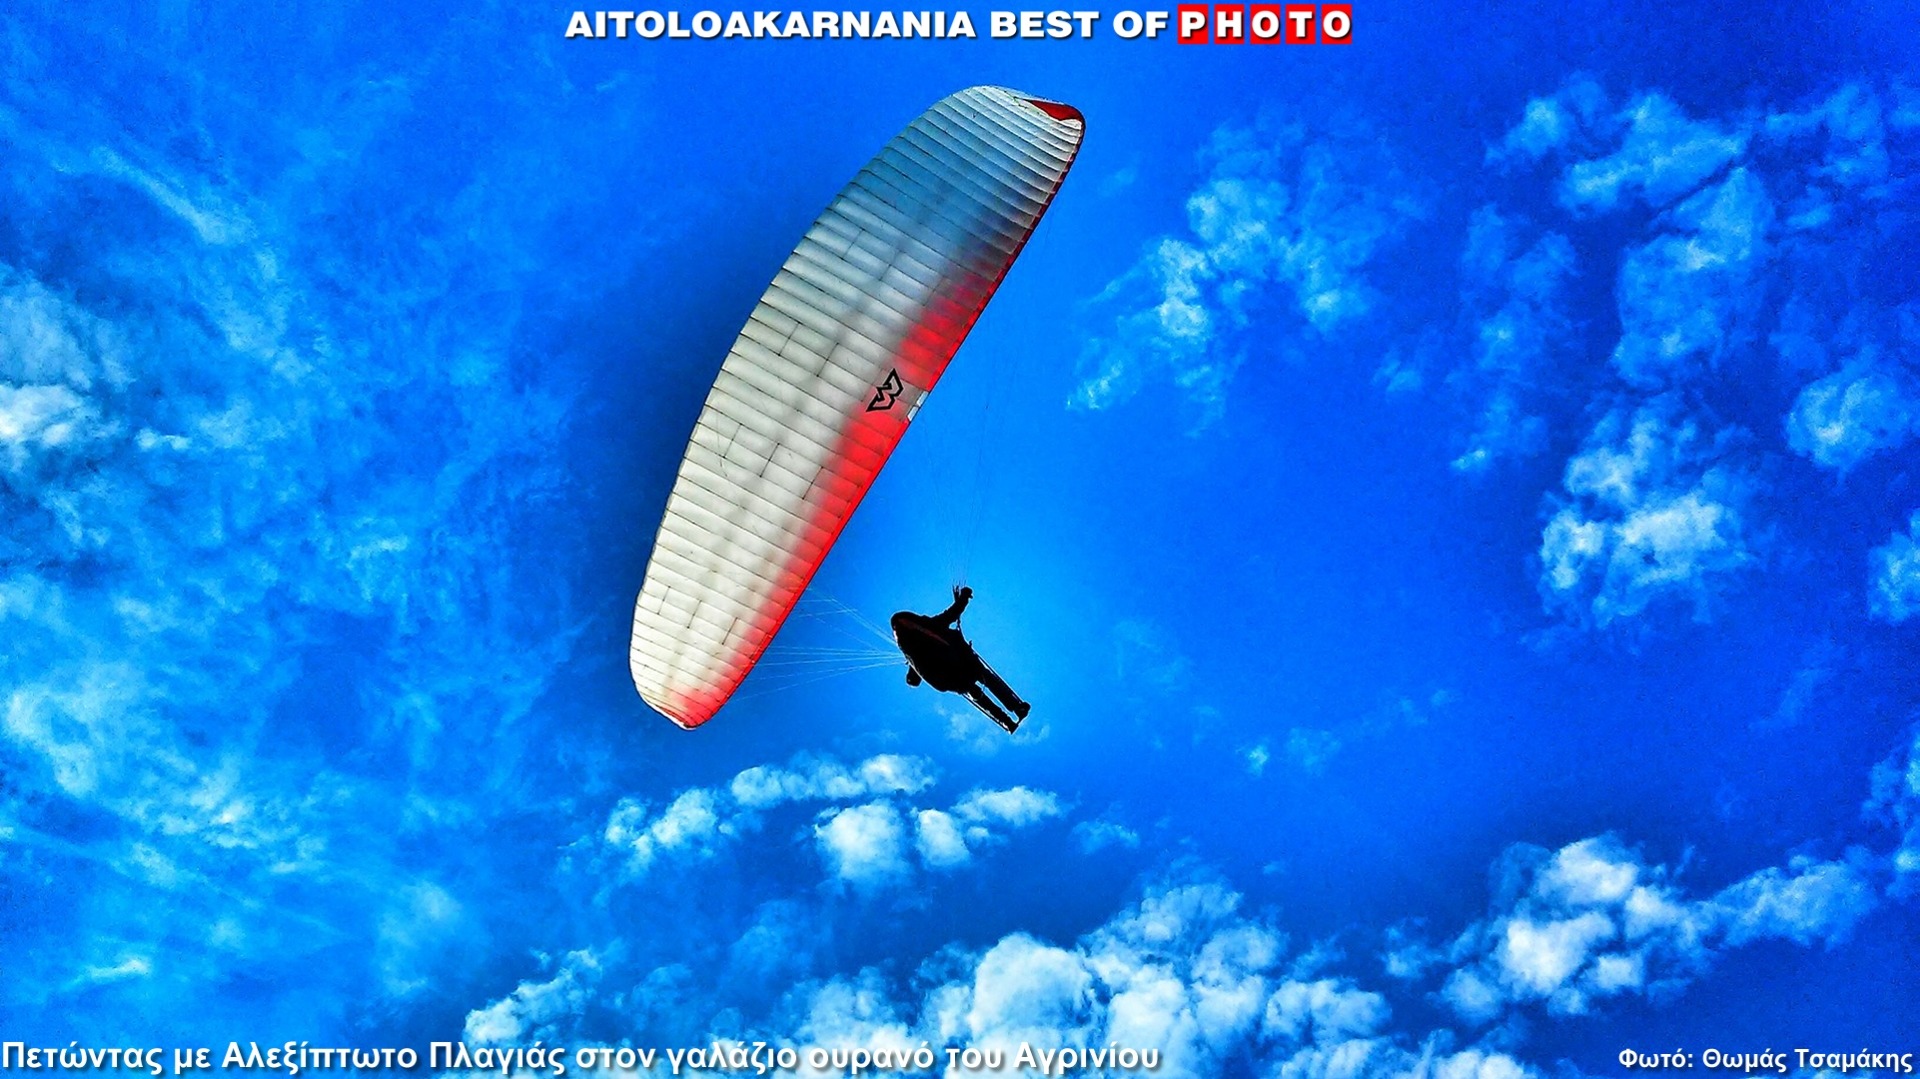 aitoloakarnania-best-of-photo-153.jpg